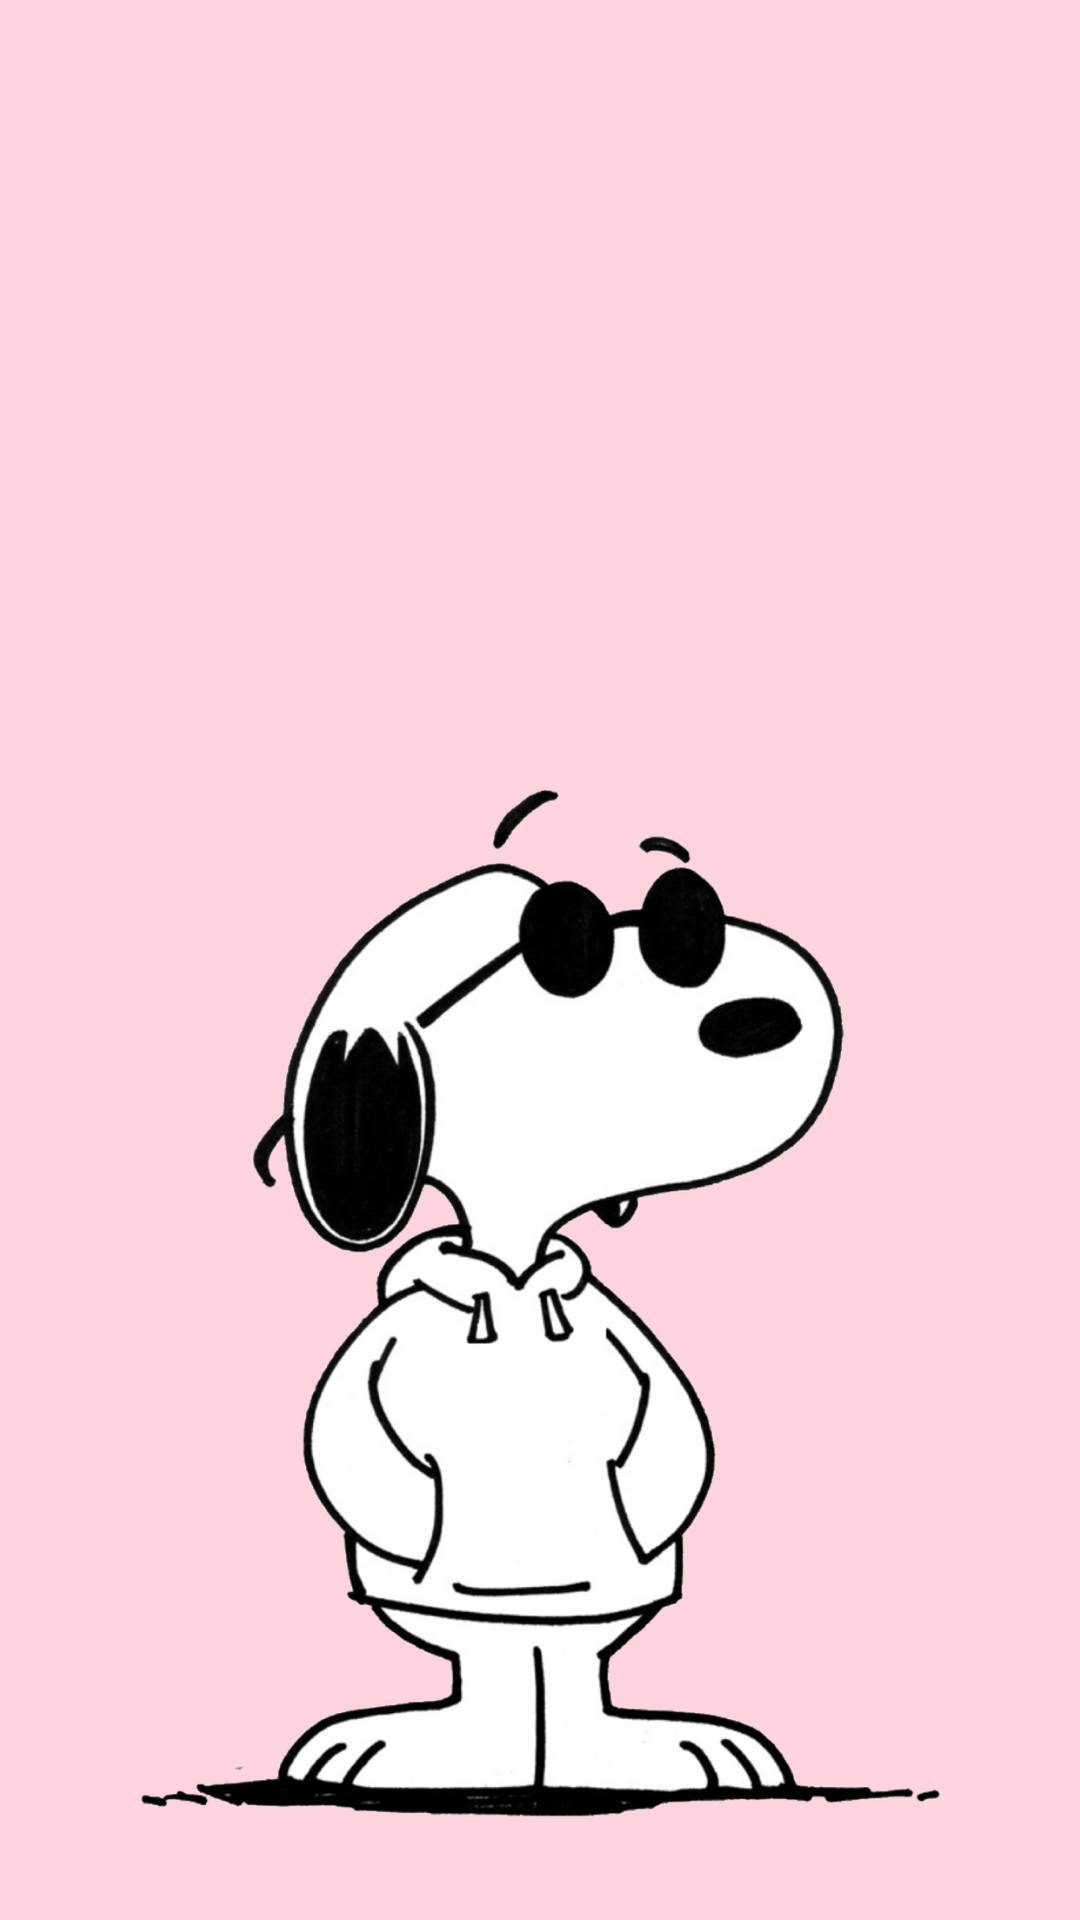 Savage Look Snoopy Cartoon Iphone Background